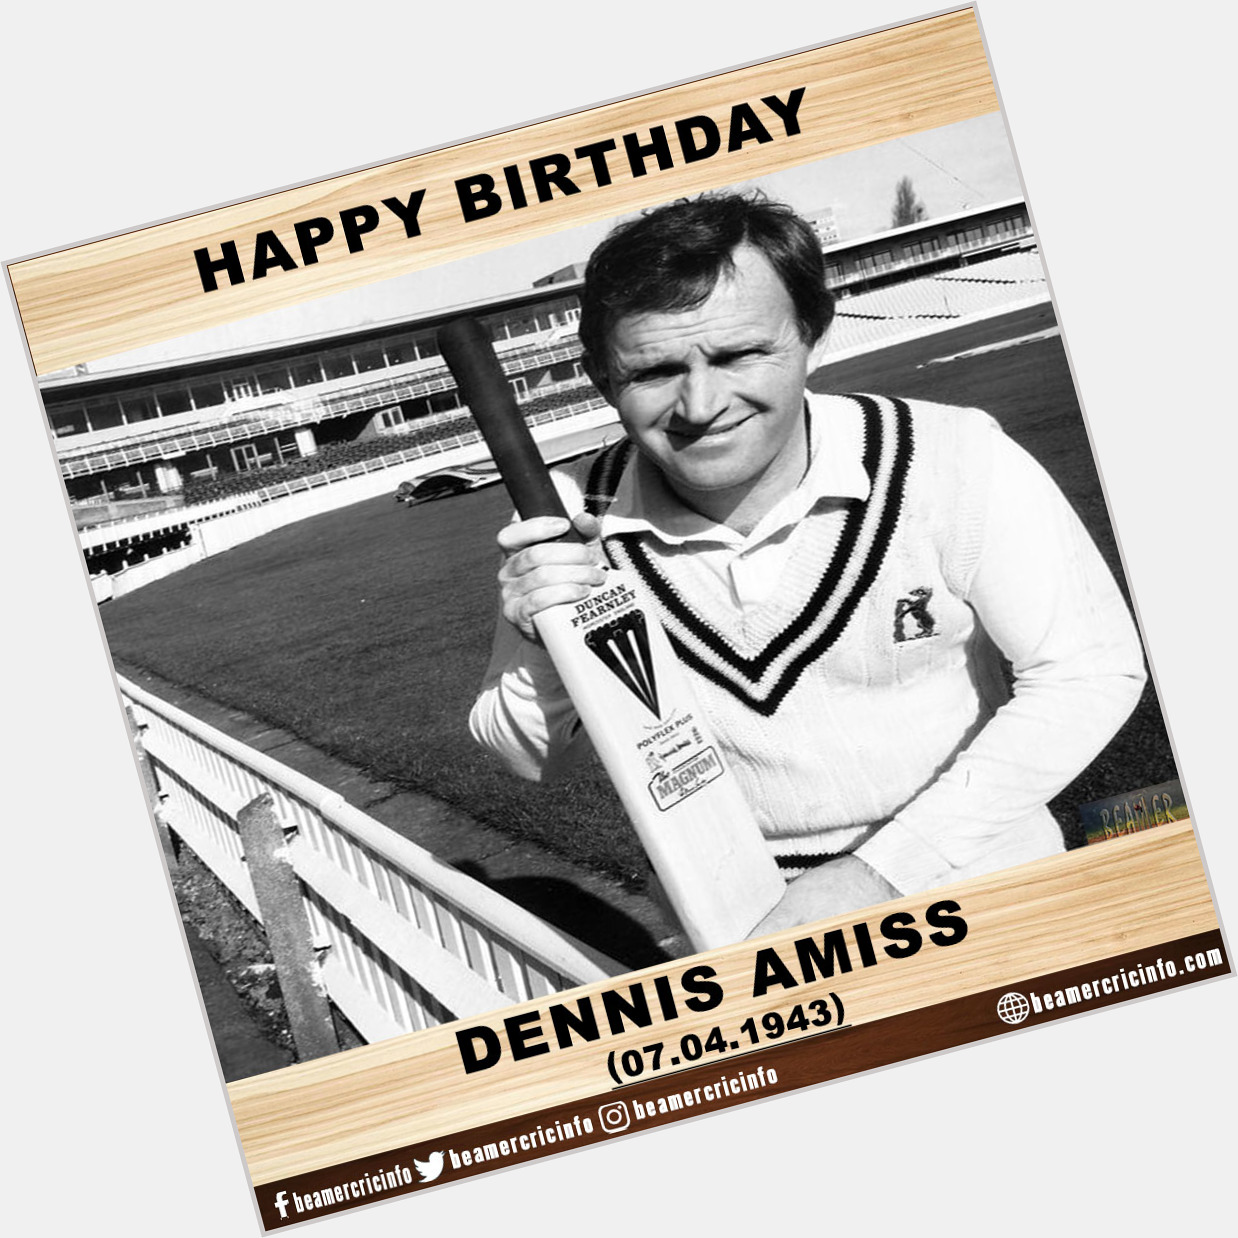 Happy Birthday!!!
Dennis Amiss...     